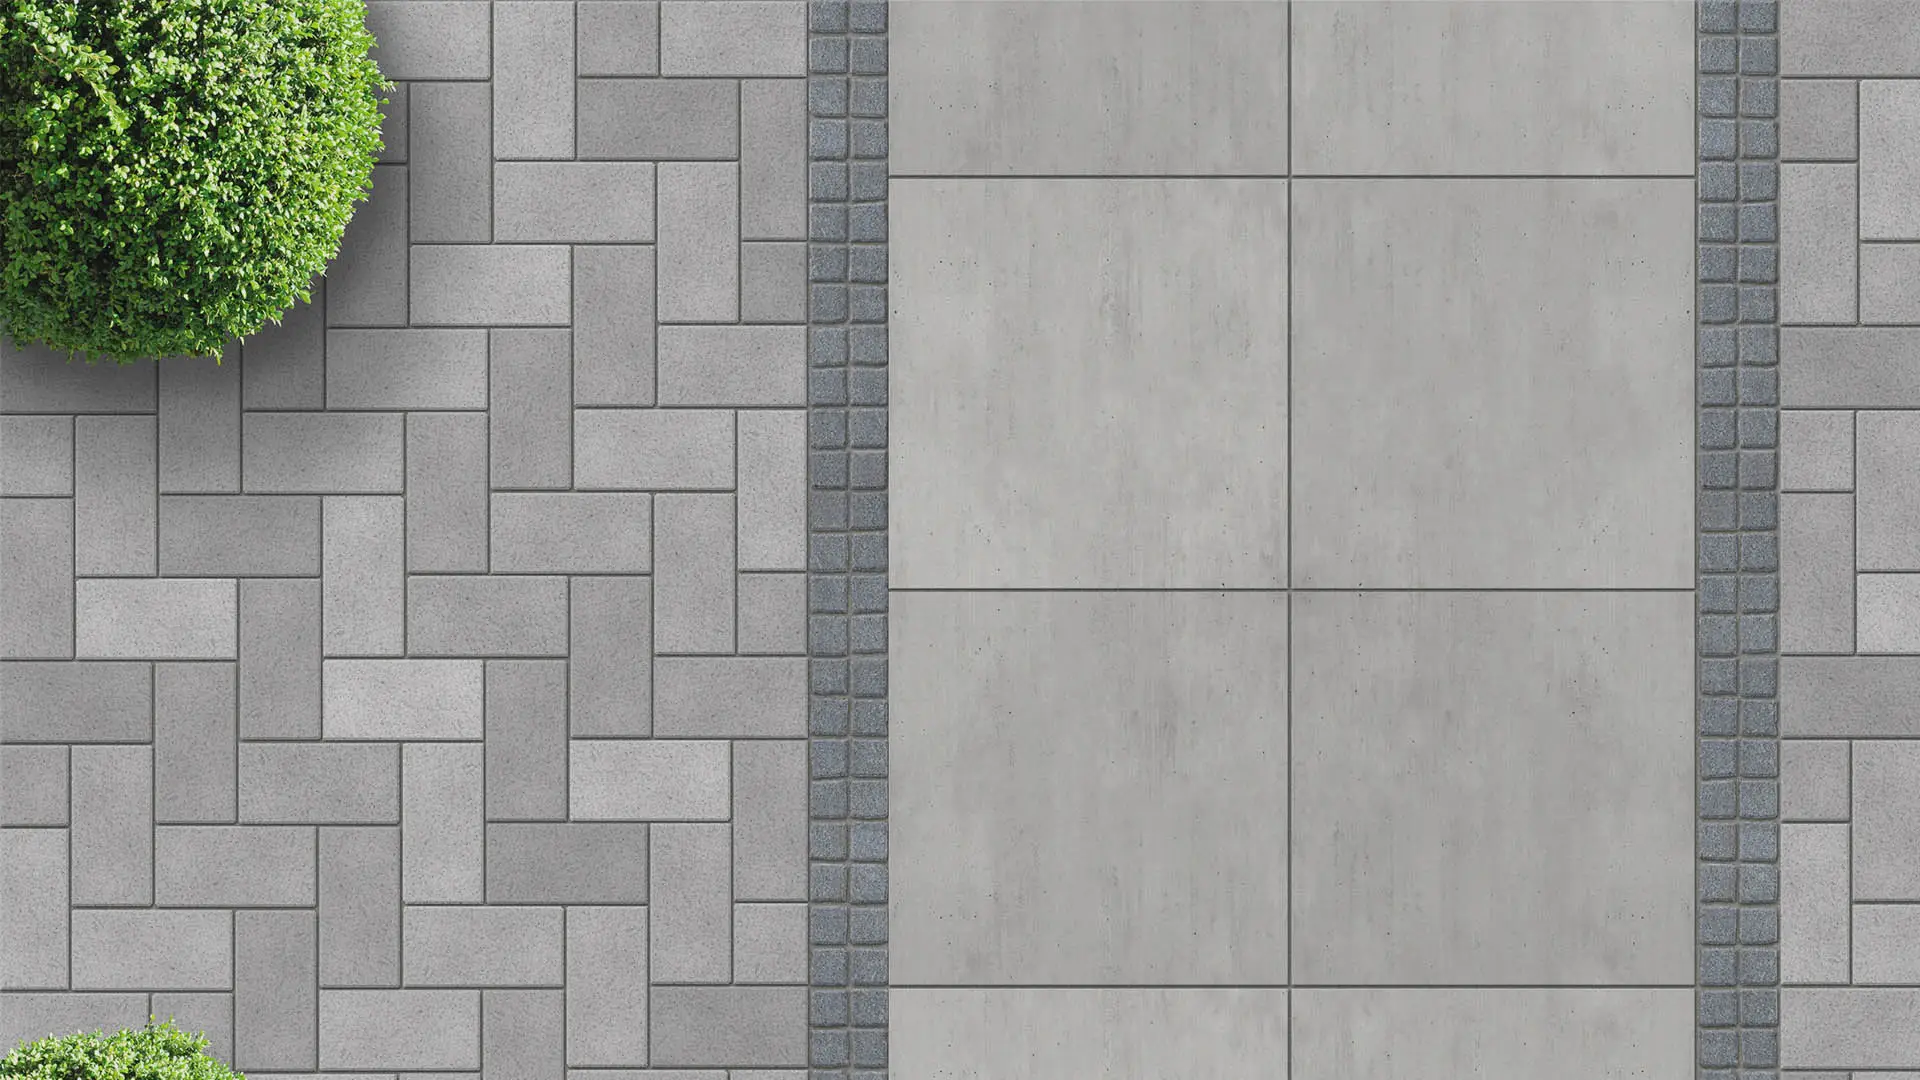 decorative concrete paver patio with detailed pattern